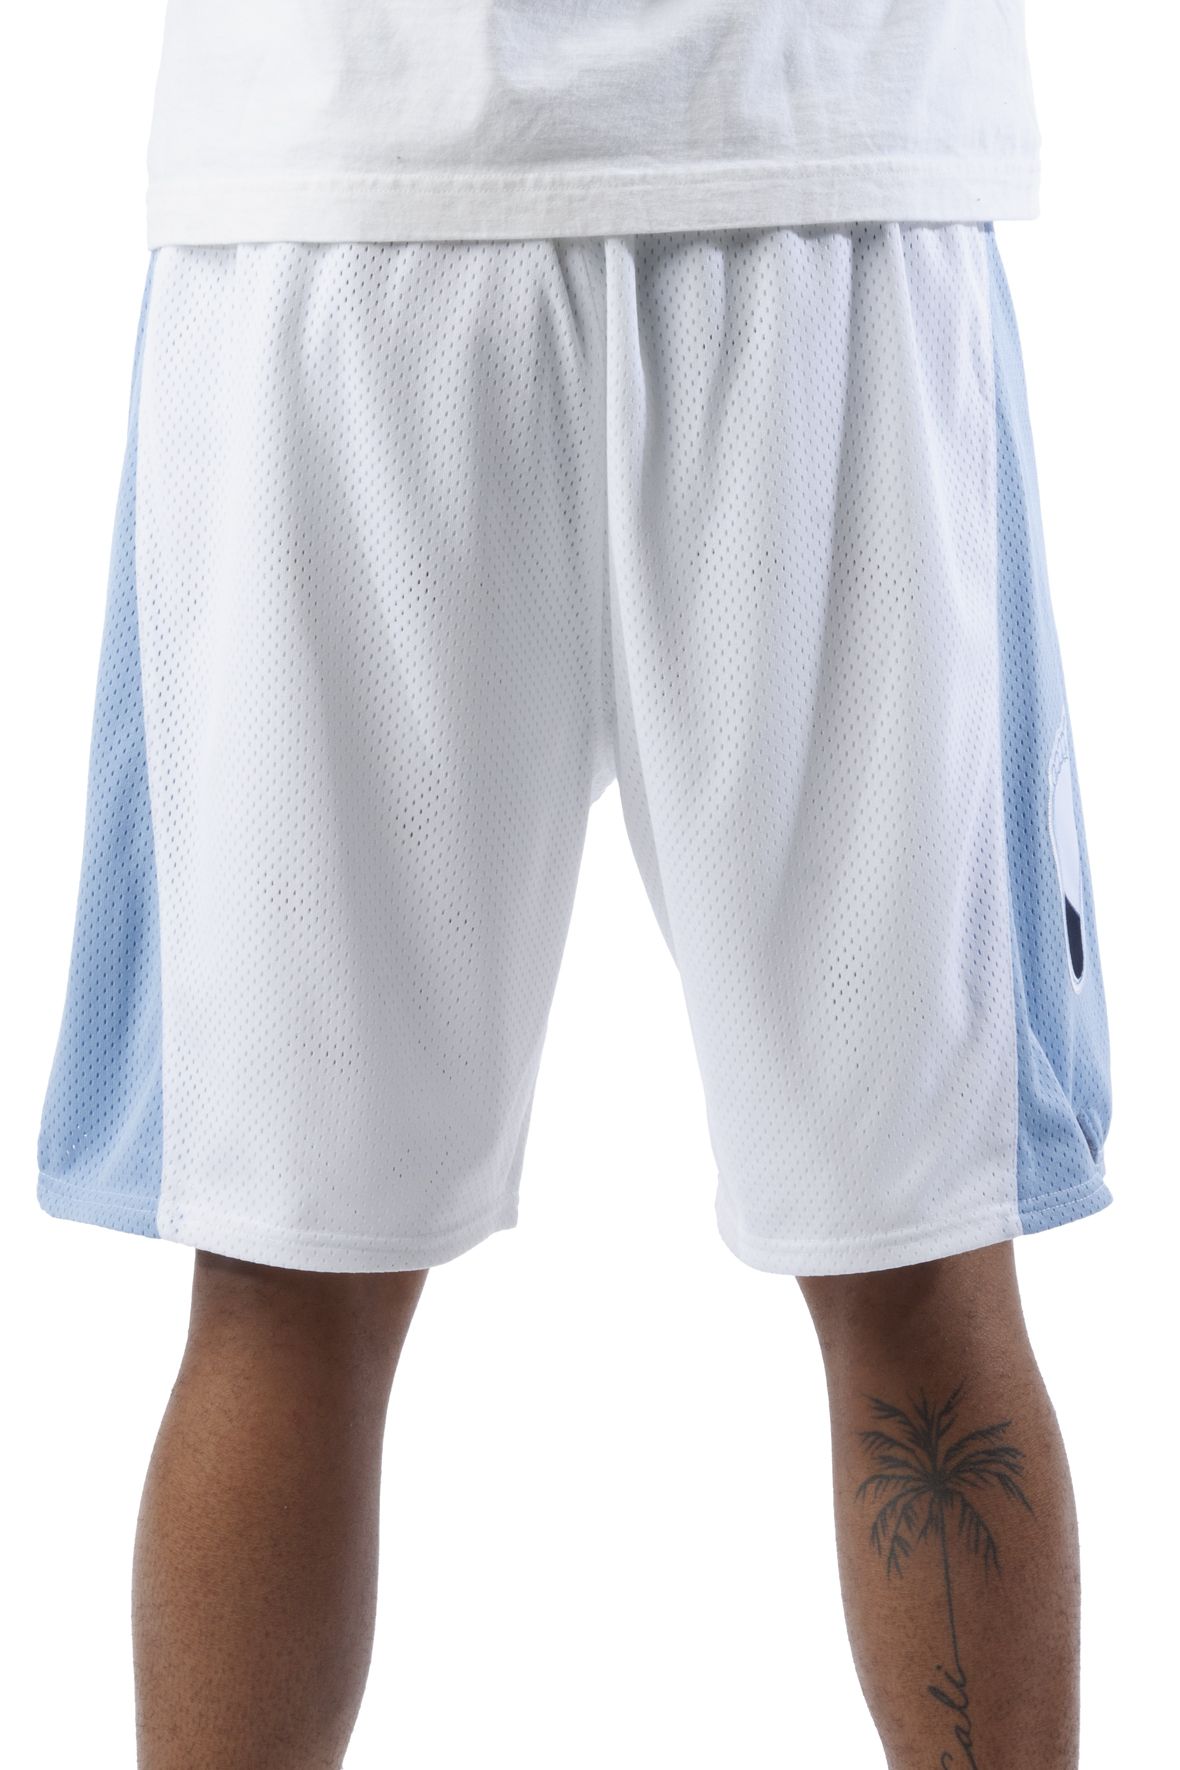 NCAA North Carolina Tar Heels Basketball Shorts - White/North Carolina  Light Blue – October's Very Own Online USA